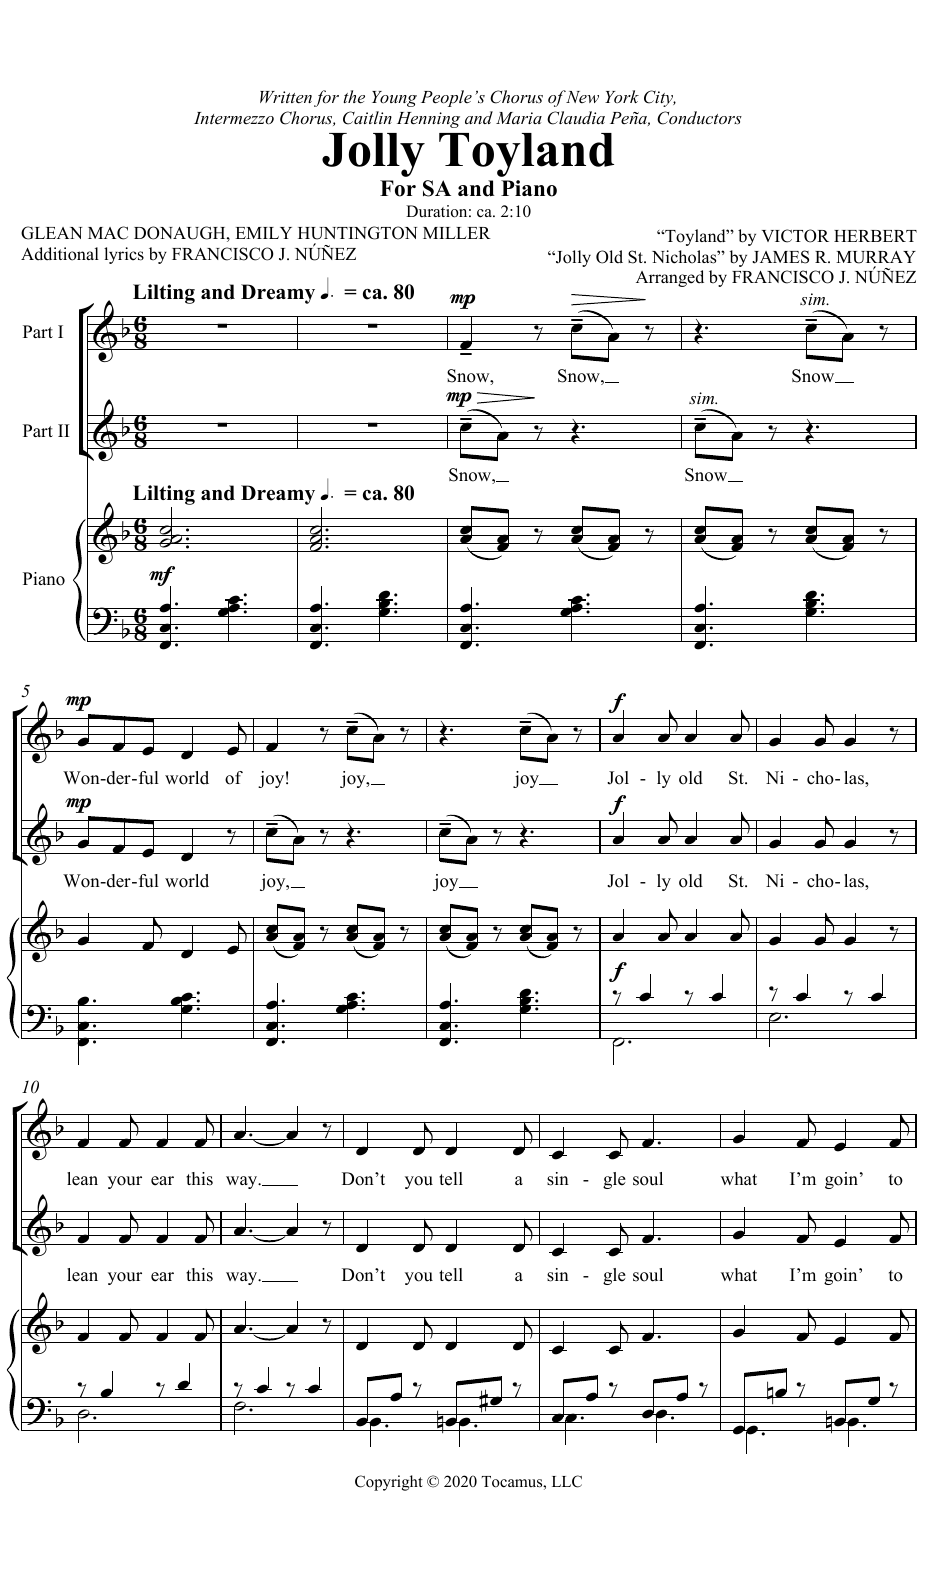 Francisco J. Núñez Jolly Toyland sheet music notes and chords arranged for 2-Part Choir